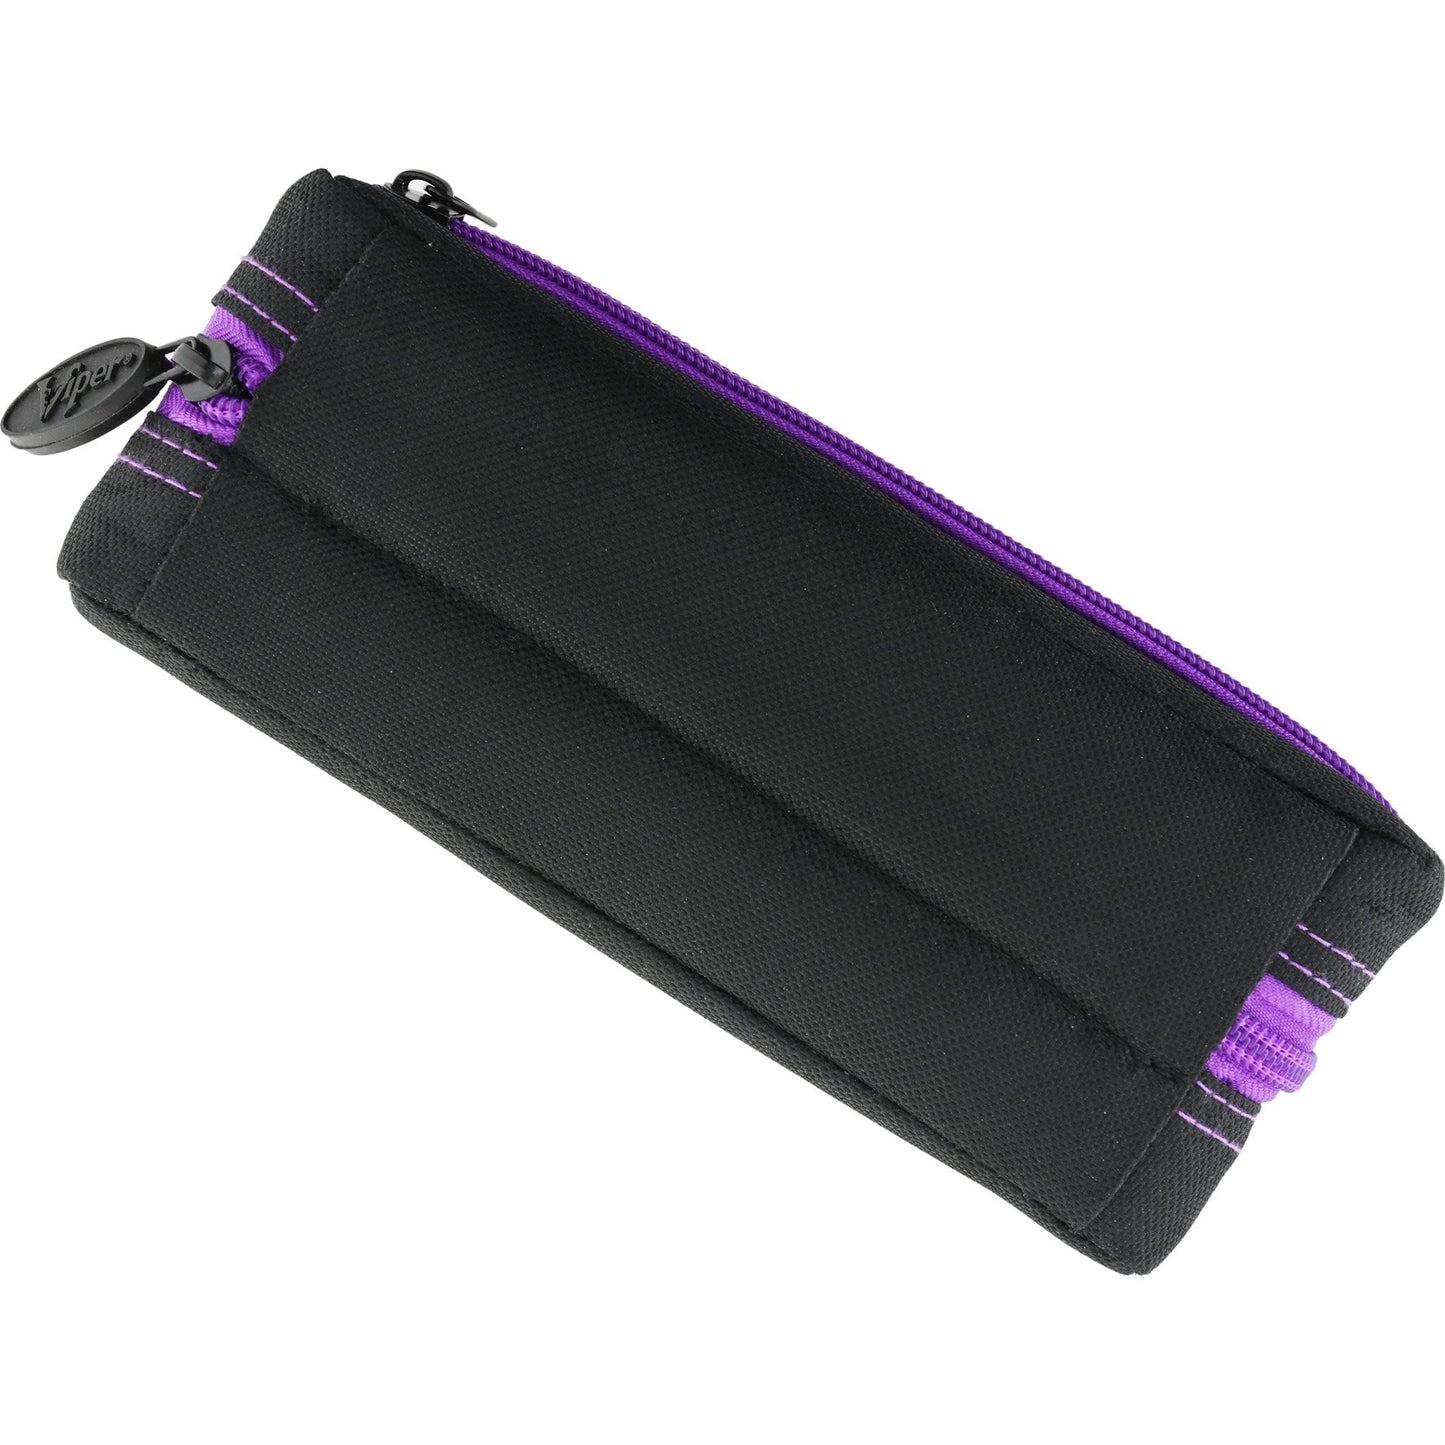 Viper Plazma Pro Dart Case - Extremely Tough & Durable